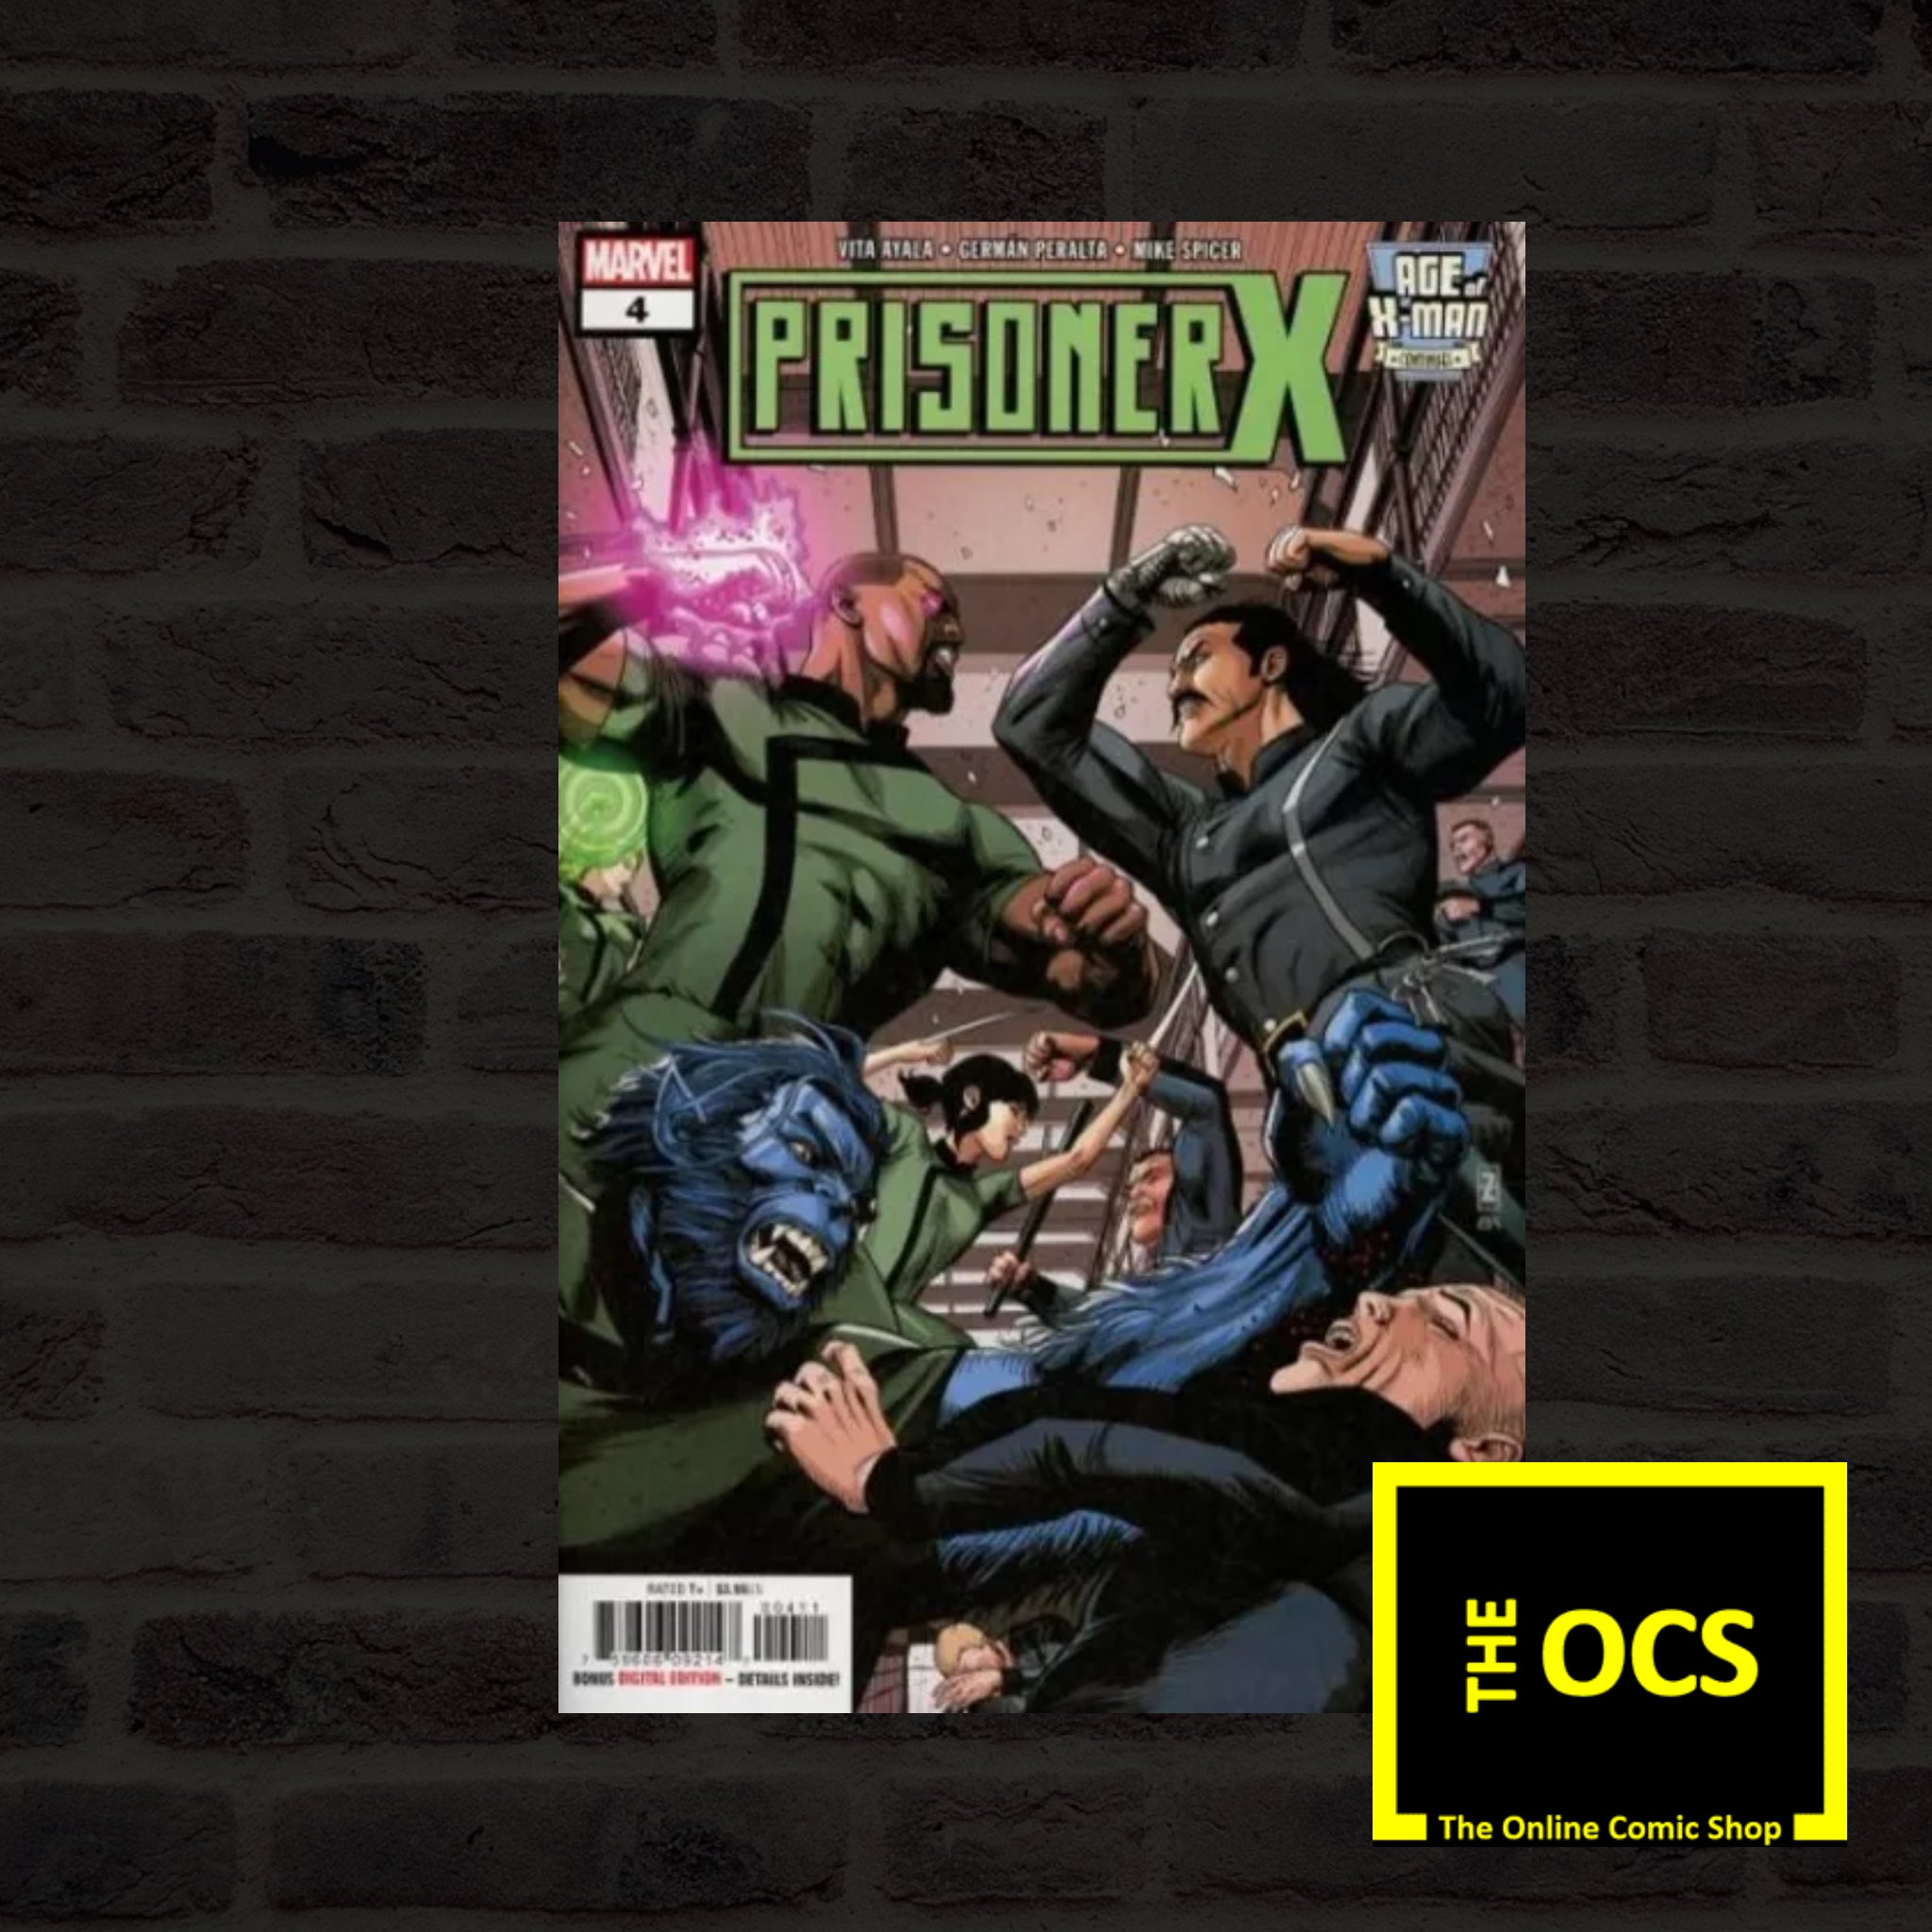 Marvel Comics Age of X-Man: Prisoner X #04 Regular Cover